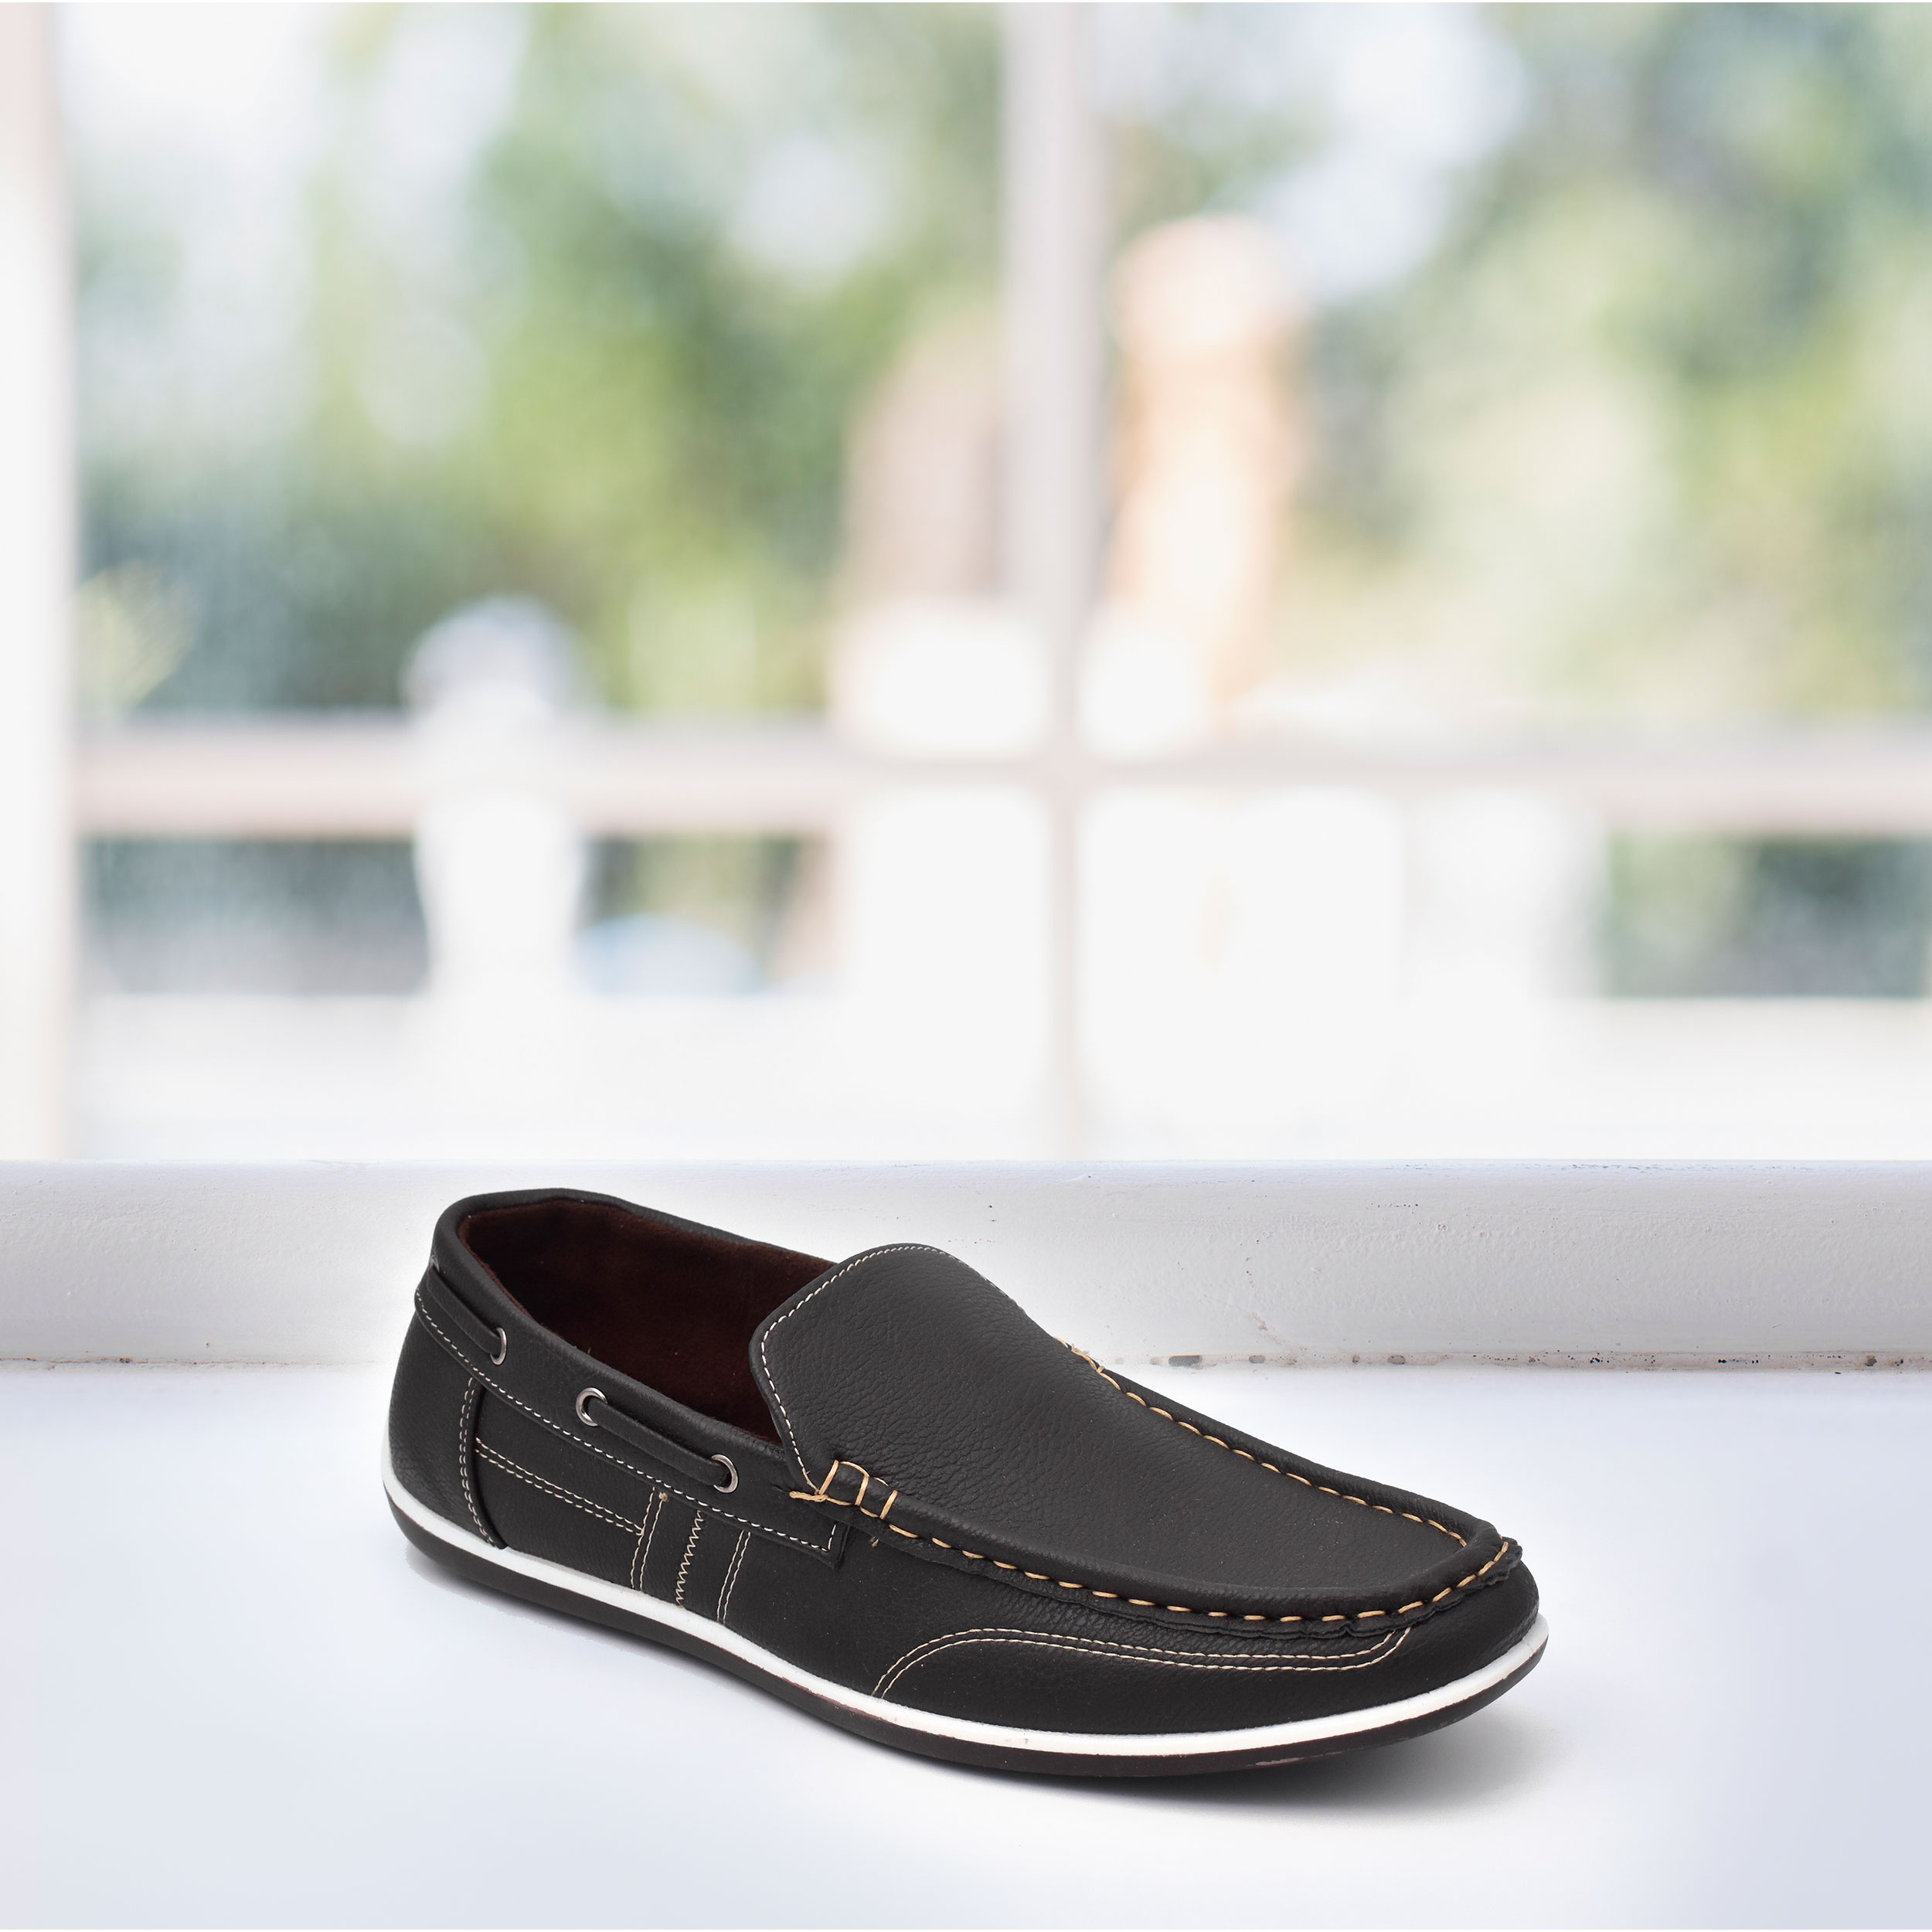 کفش روزمره مردانه پاما مدل K52 کد G1209 -  - 2